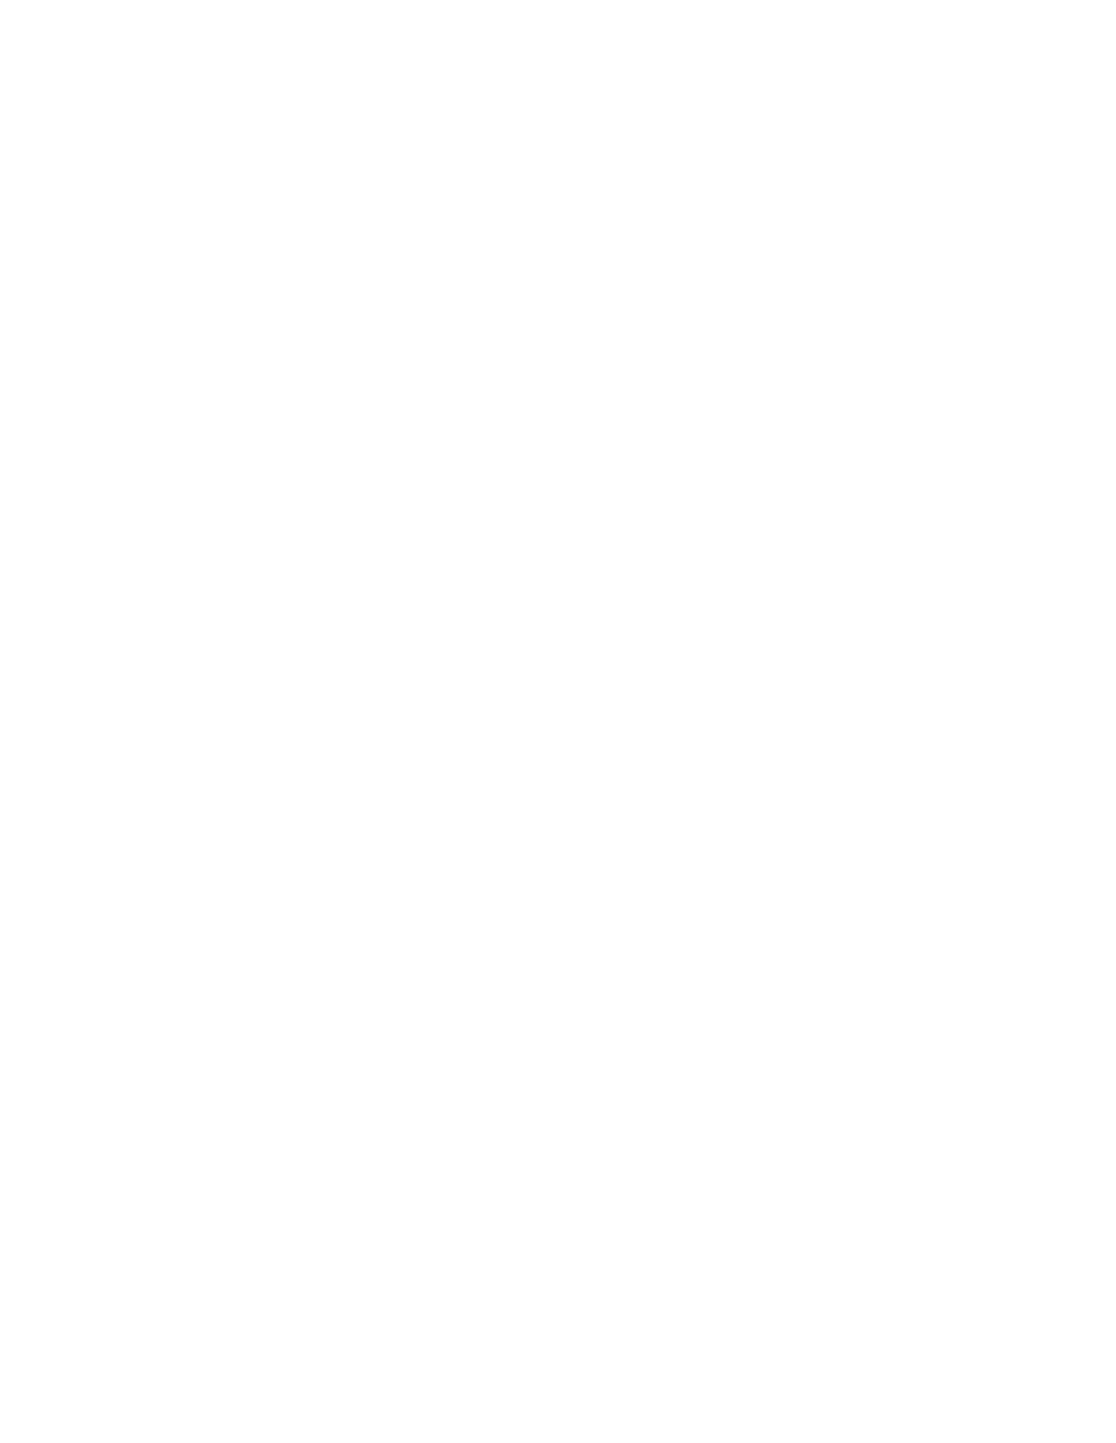 1280px-Warner_Bros._Animation_2010_Logo_White.png